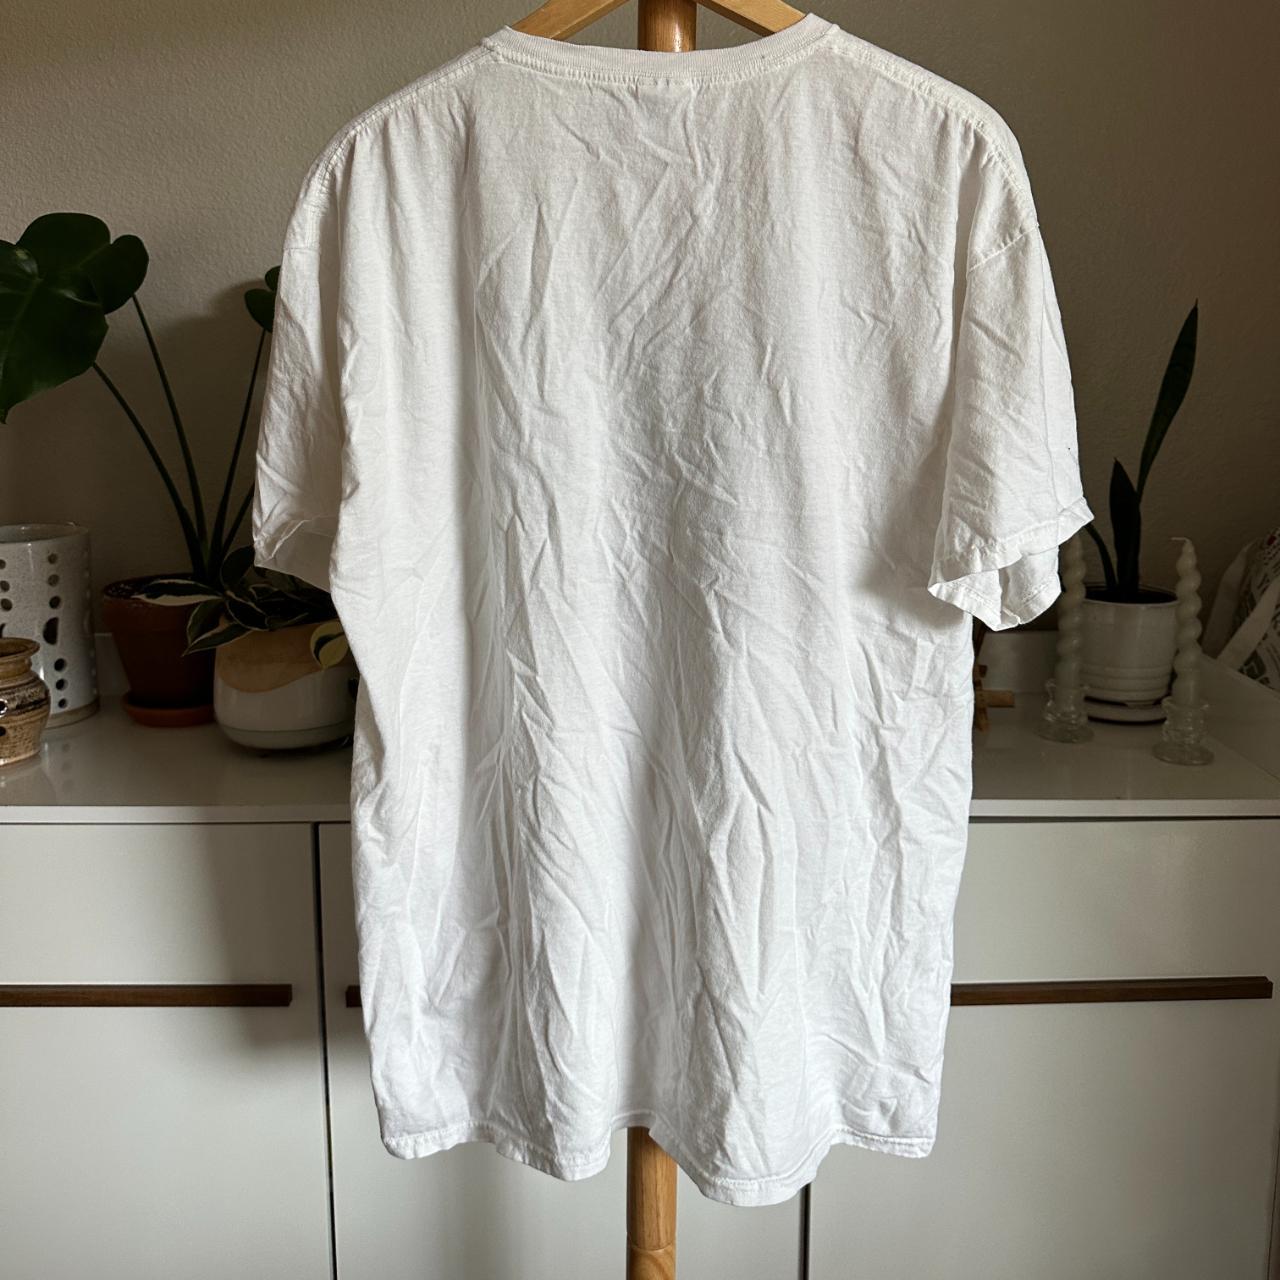 Fruit of the Loom Men's White and Cream Shirt (4)